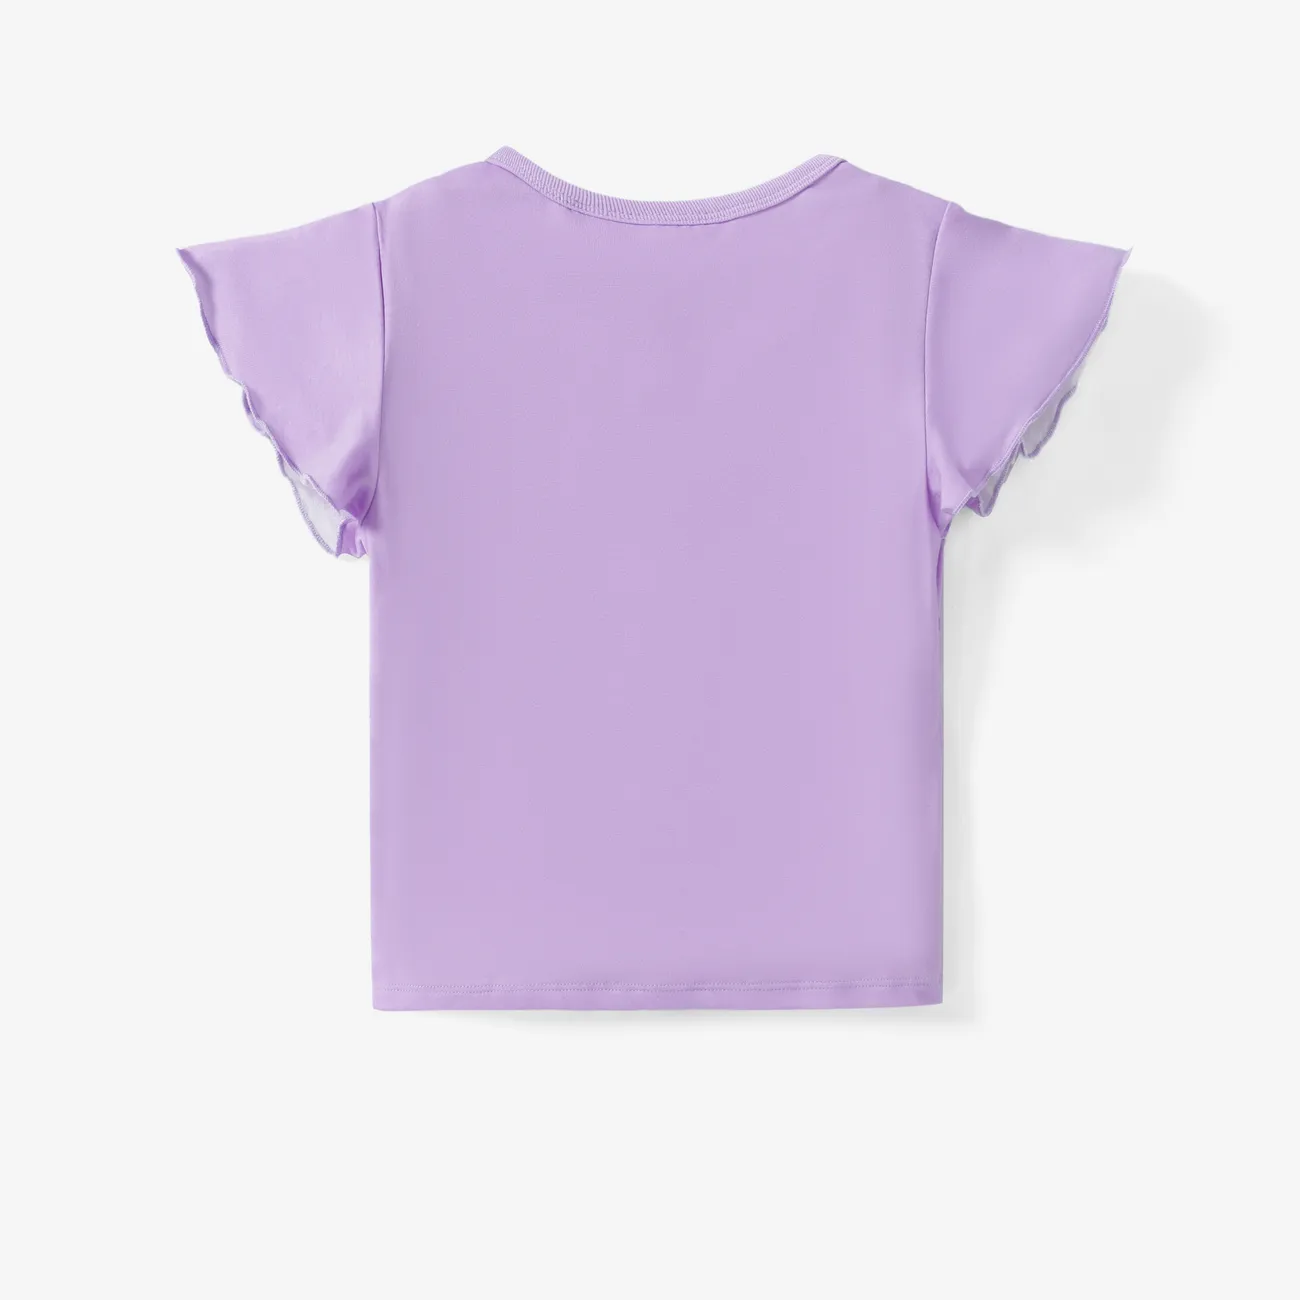 Disney Frozen Toddler Girls Elsa/Anna 1pc Naia™ Character Print Ruffle-sleeve Top  Purple big image 1